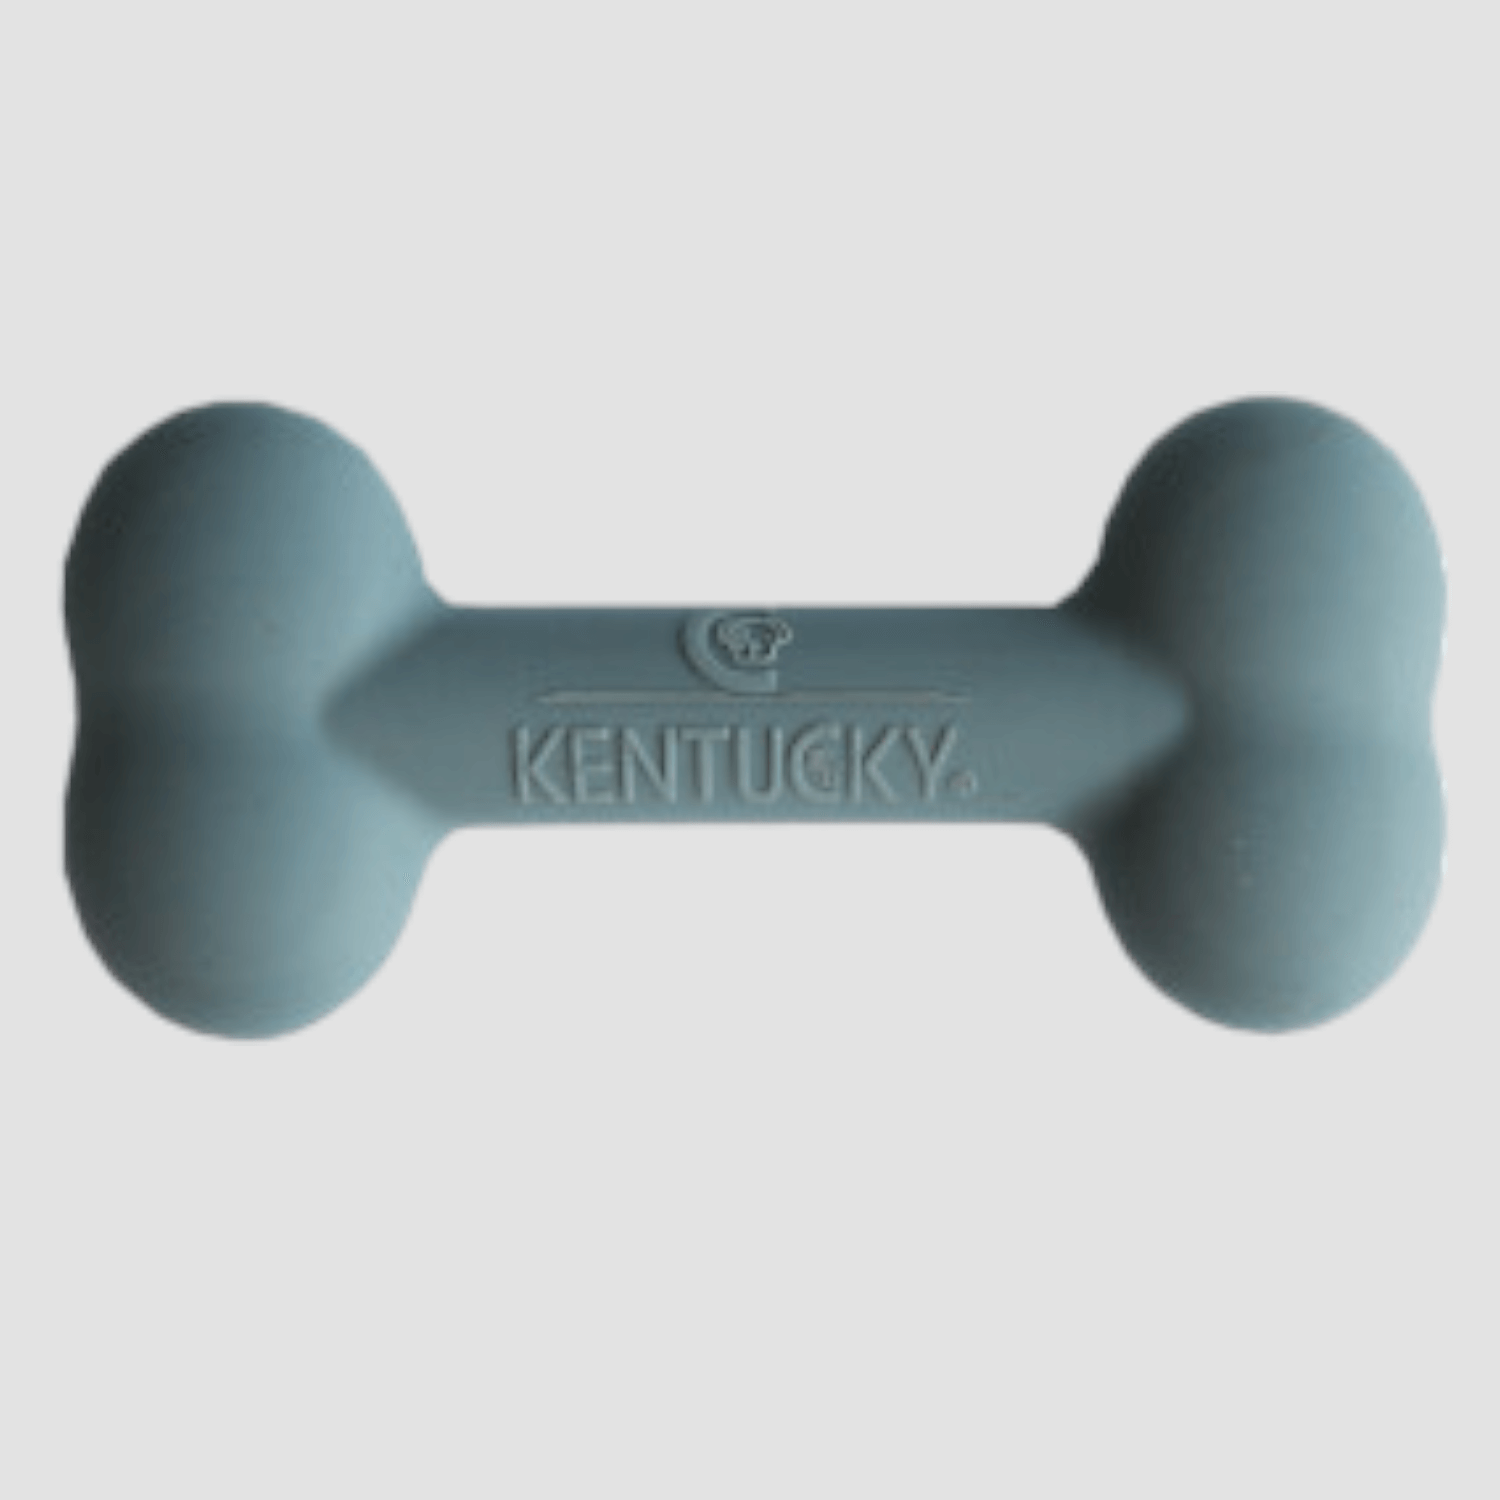 Kentucky Hundespielzeug Silikonknochen Grau